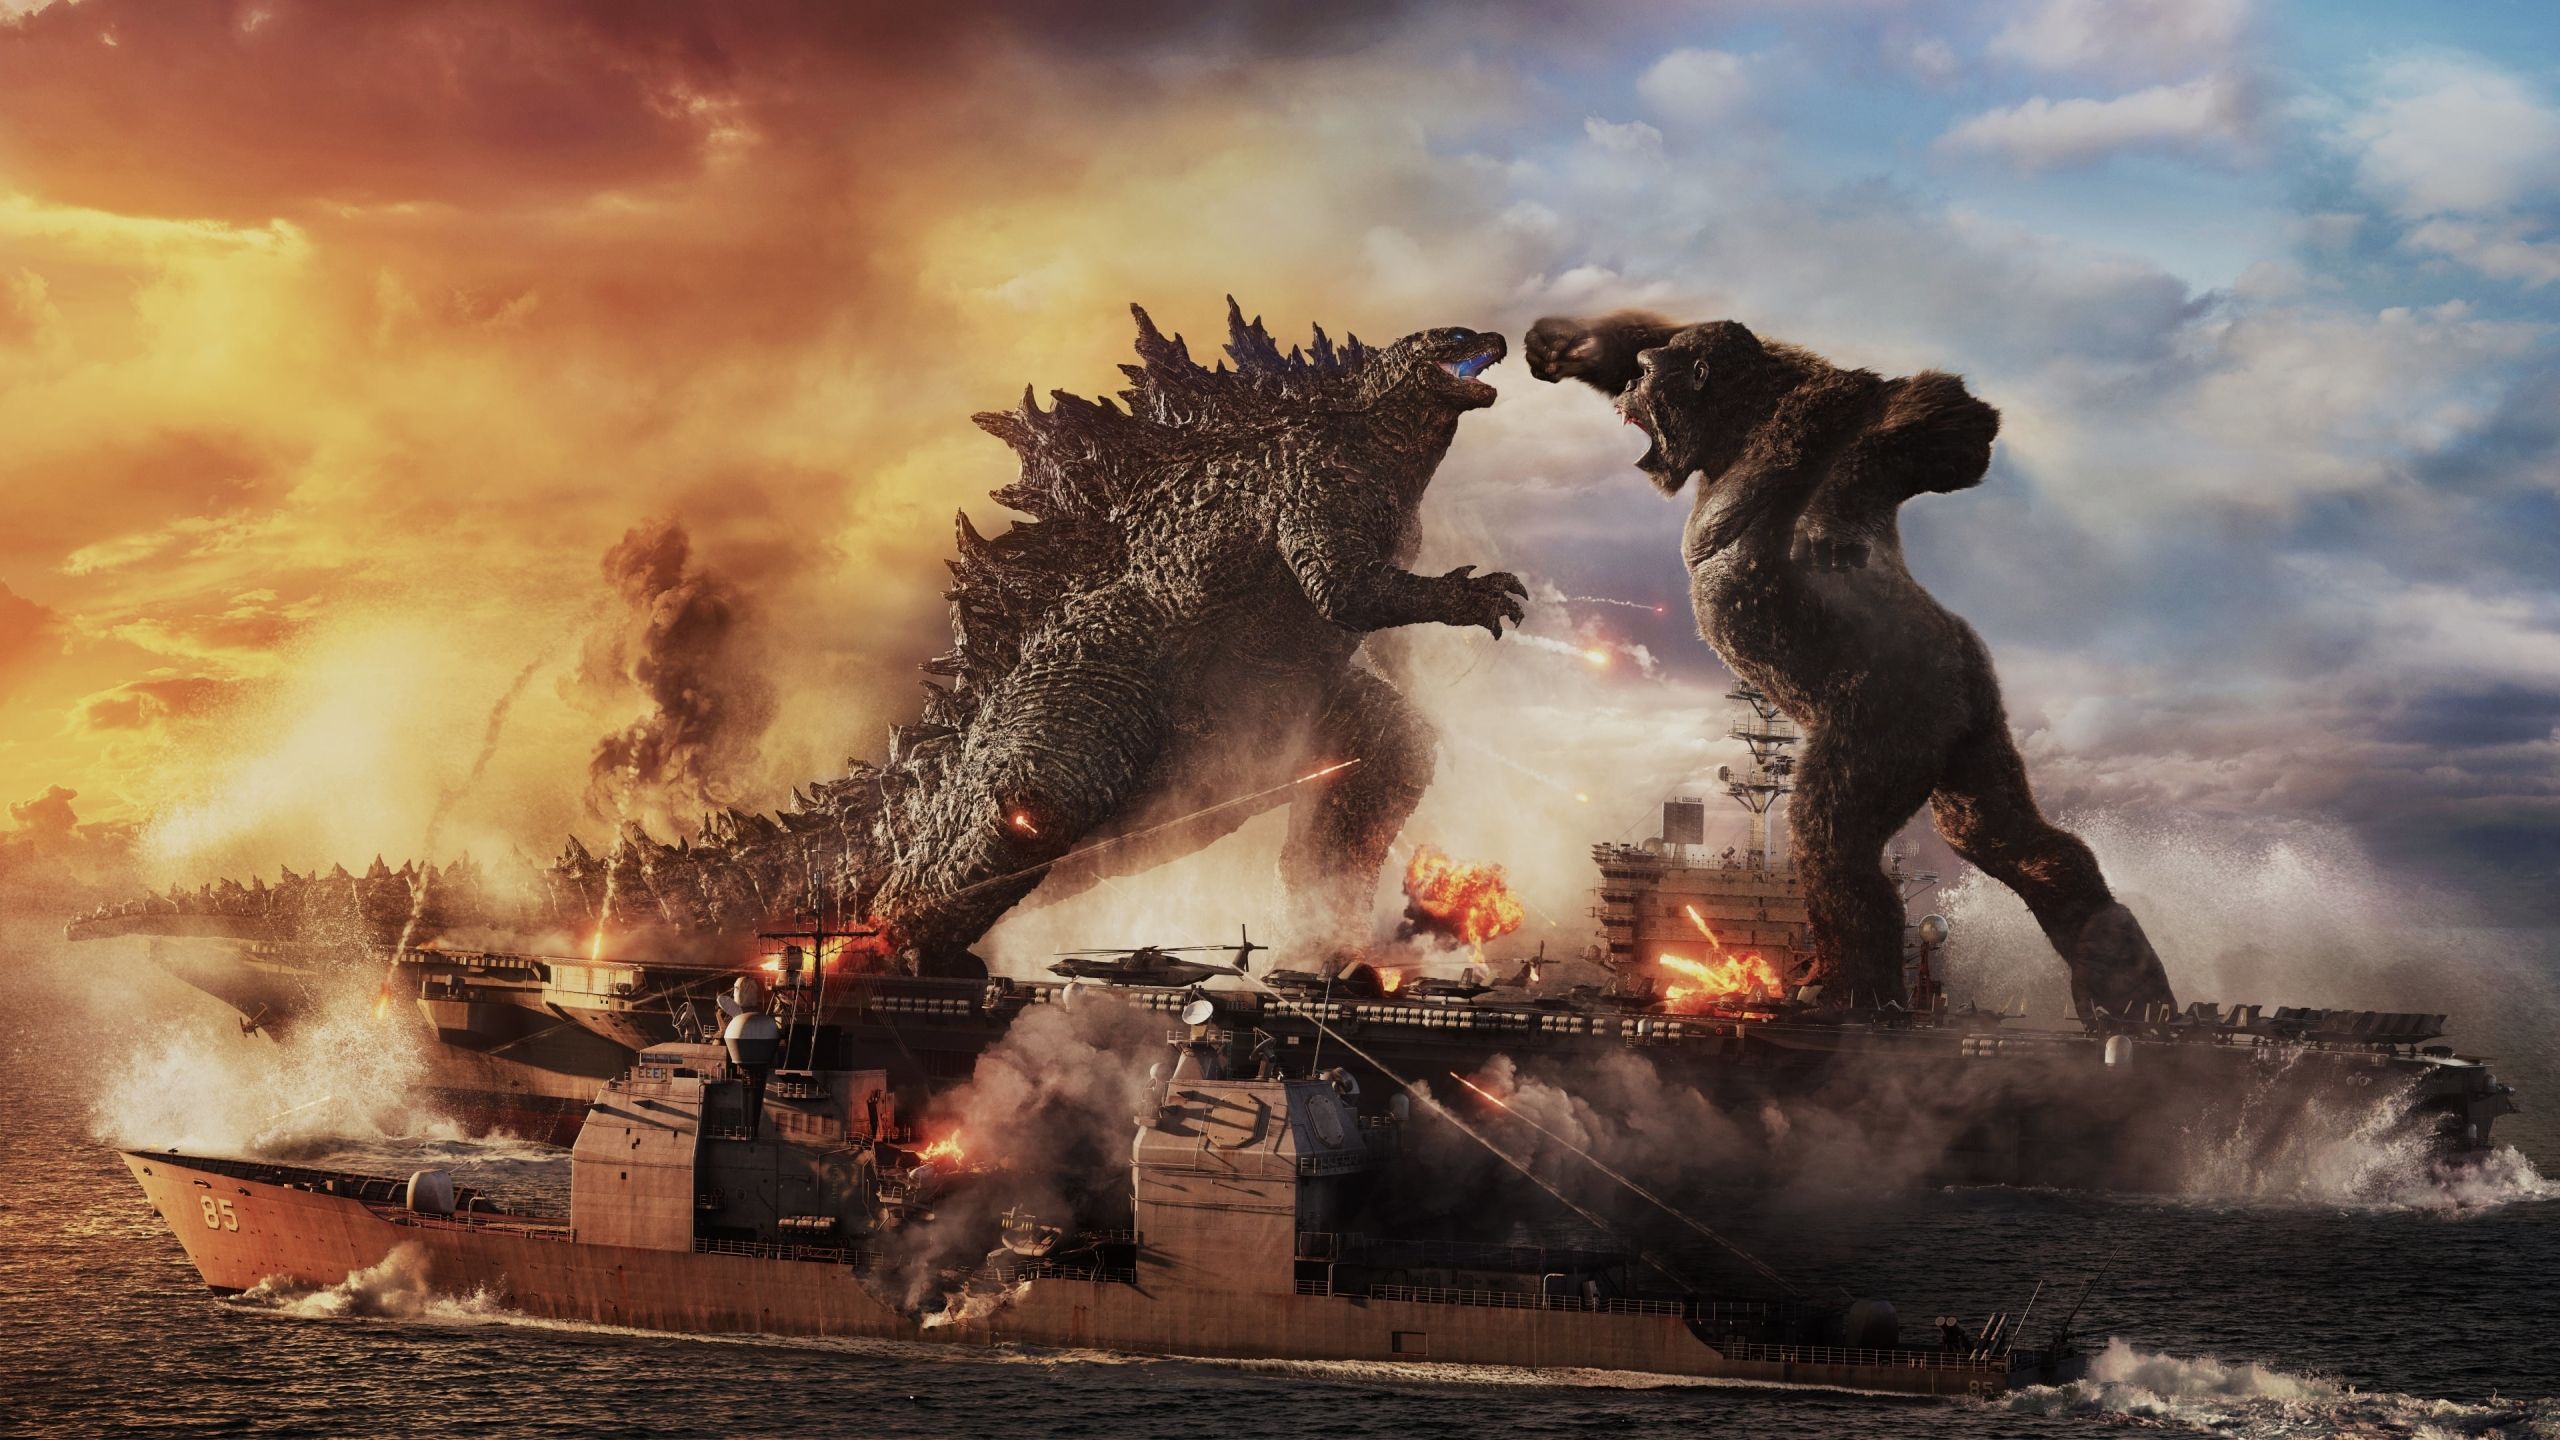 Cedars. 'Godzilla vs. Kong' Brings A Legendary Rivalry to the Big Screen